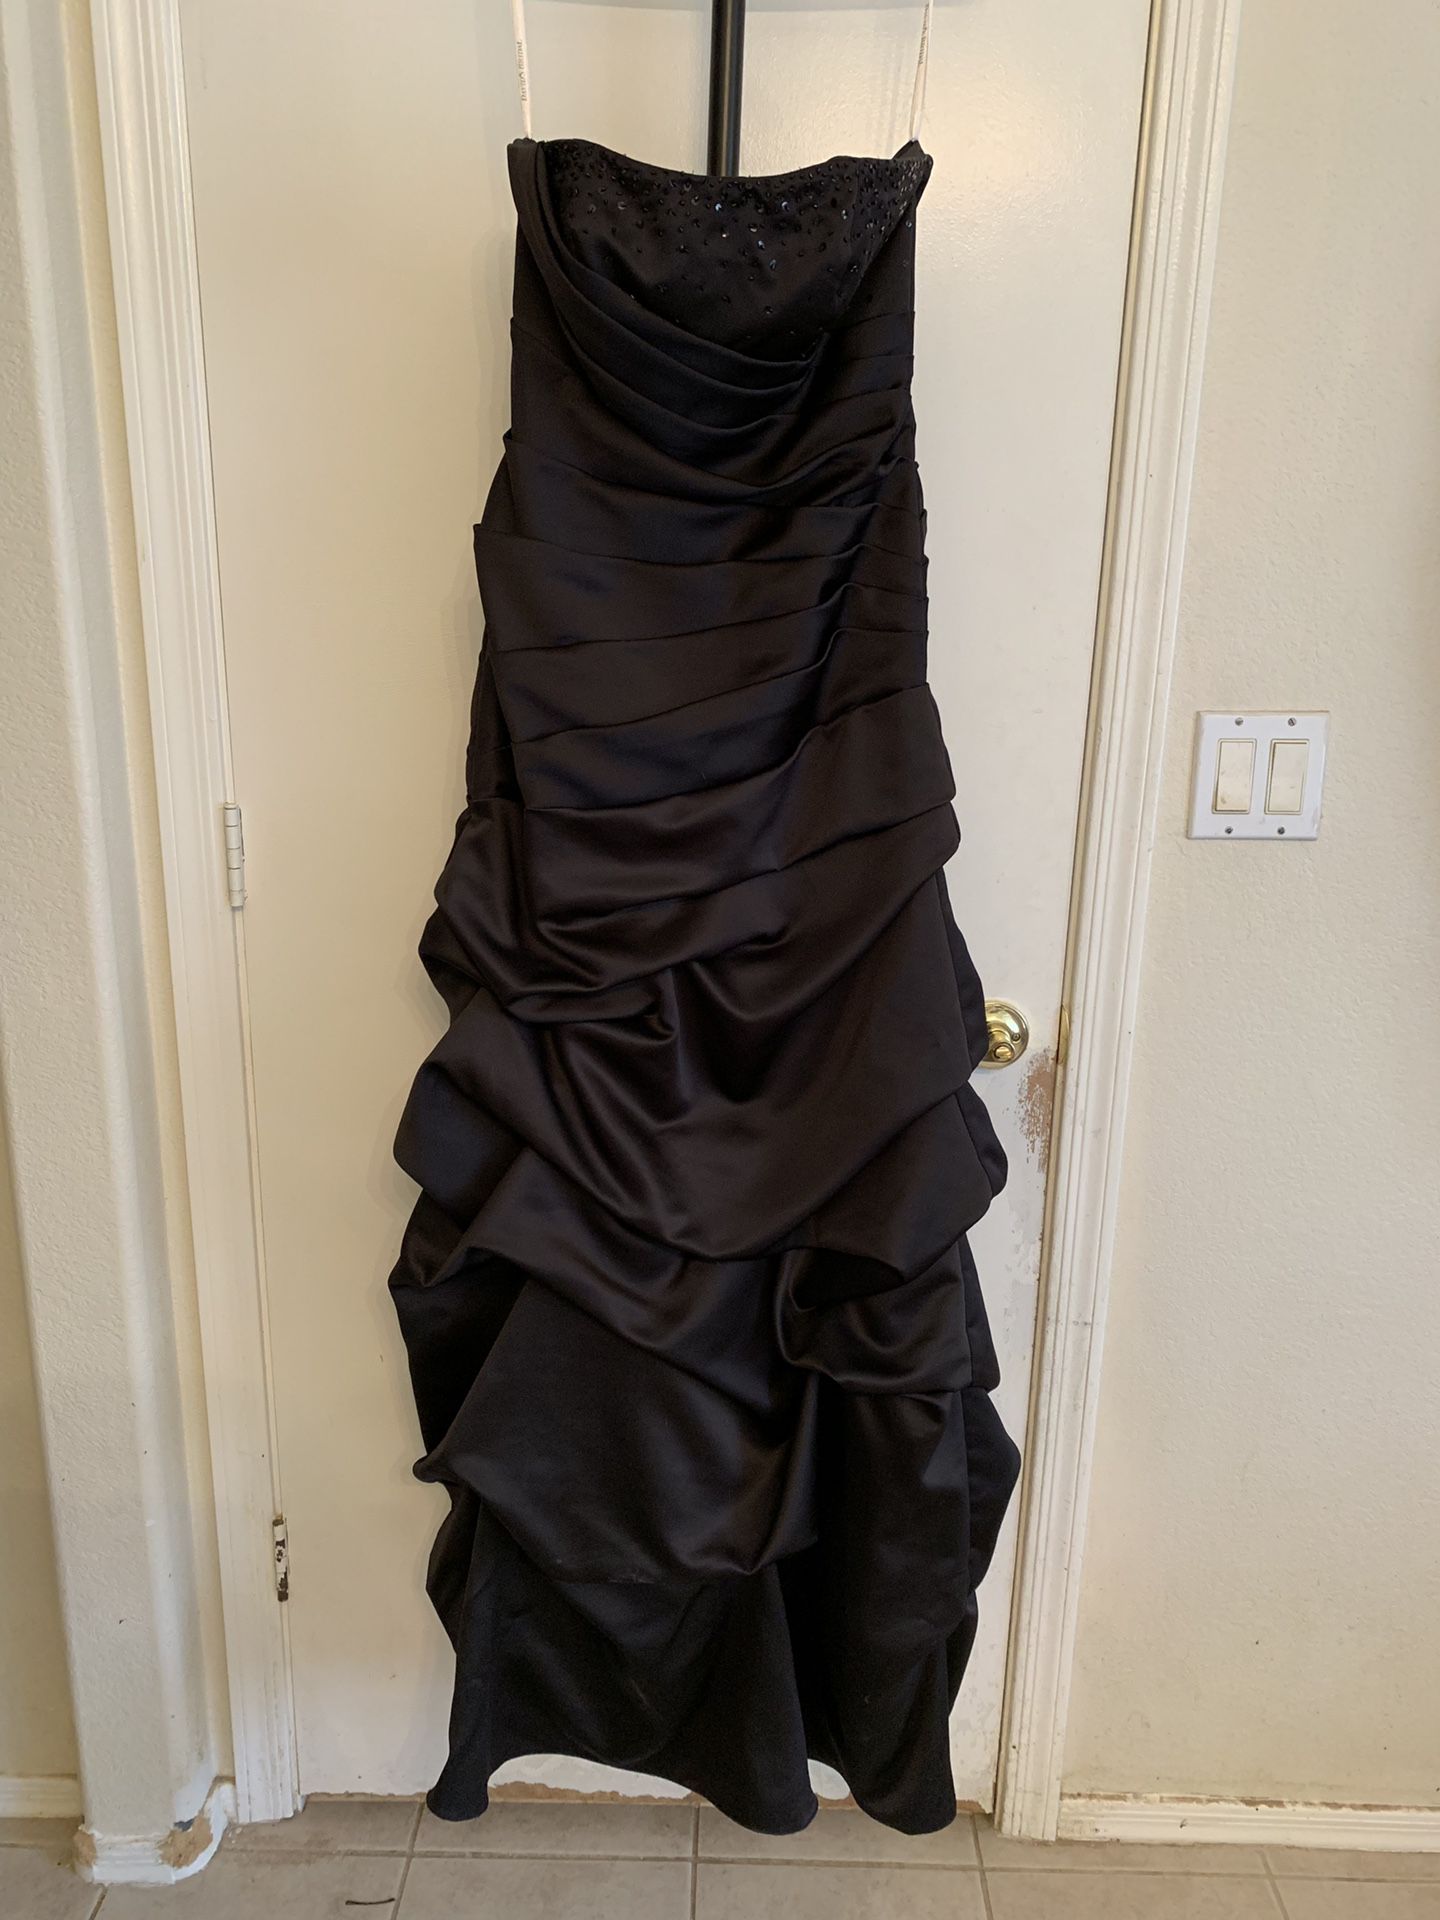 Black prom dress